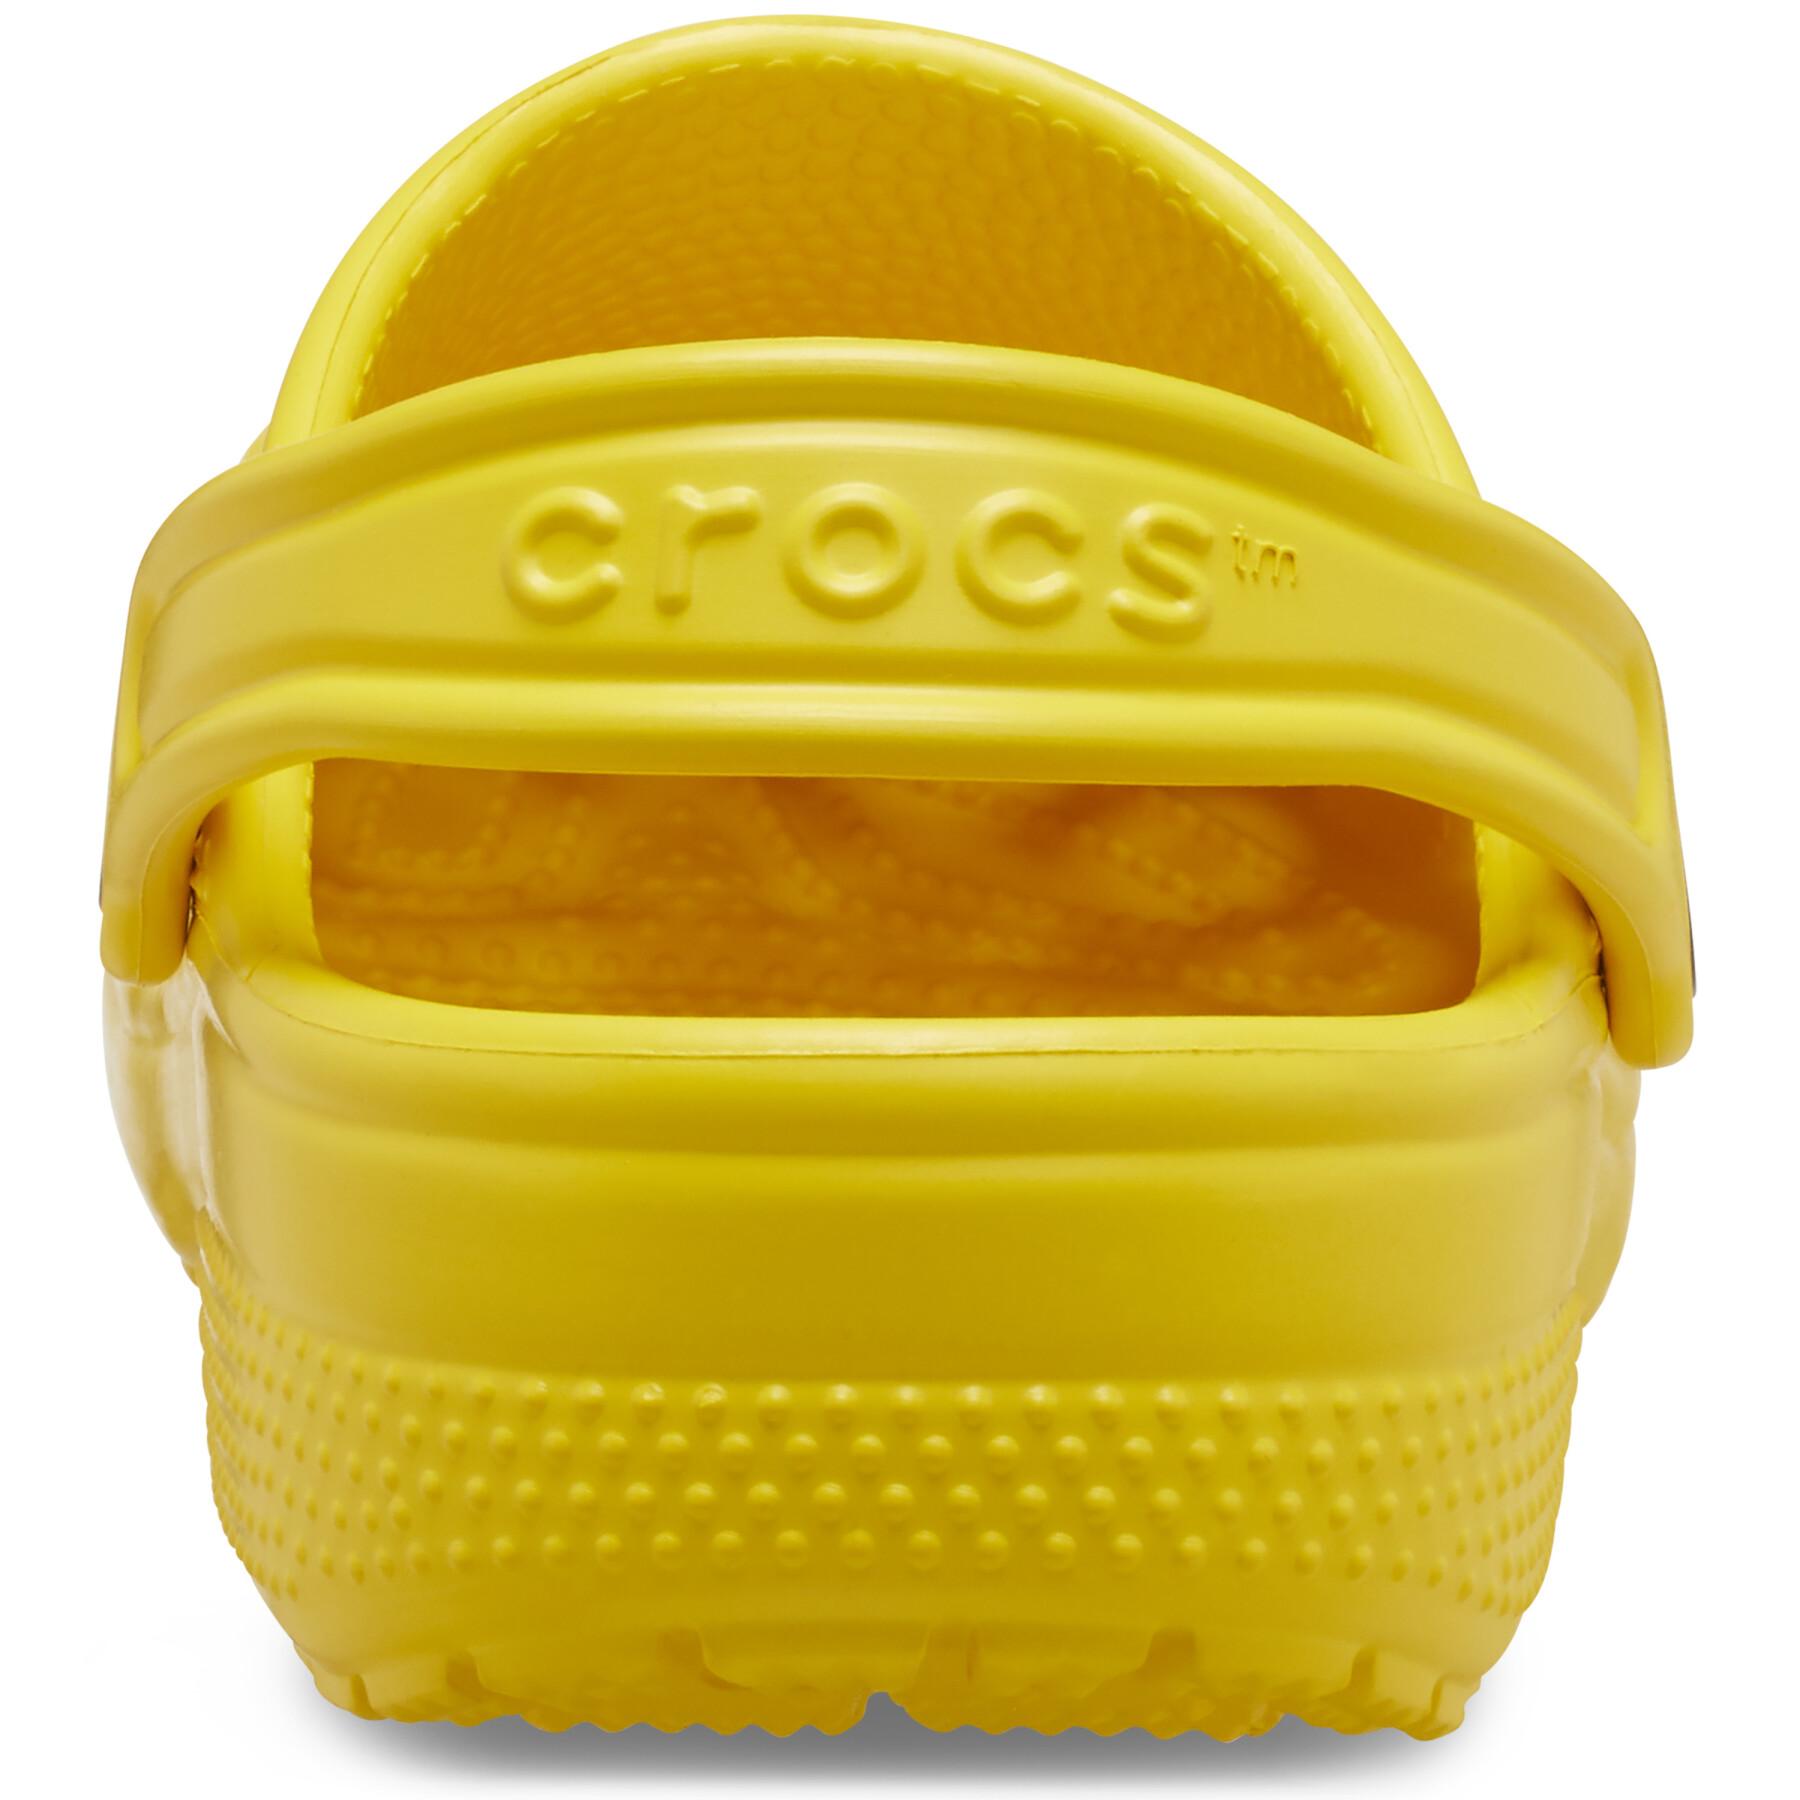 Baby klompen Crocs Classic